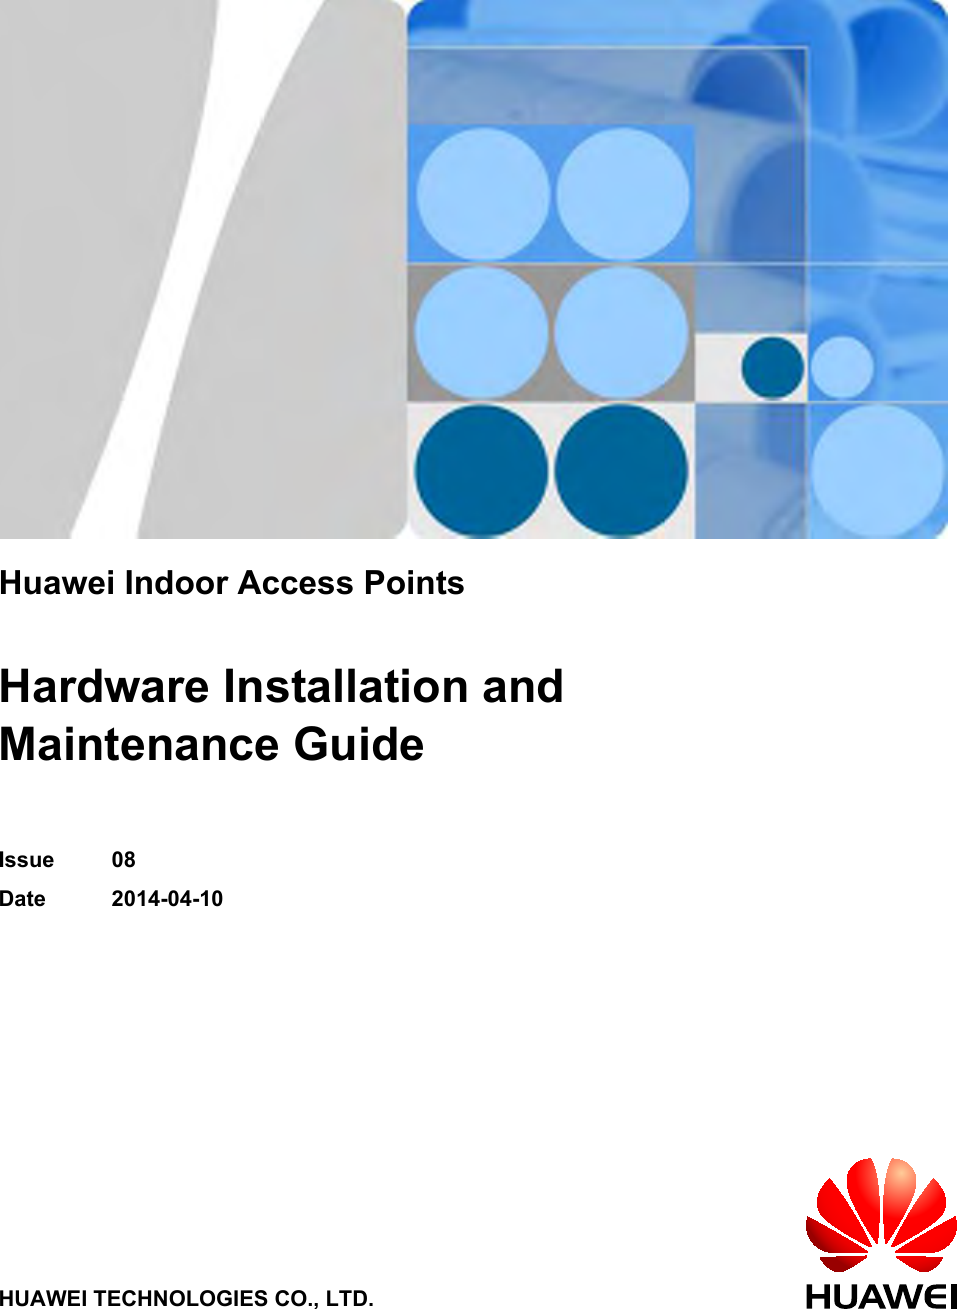 Huawei Indoor Access PointsHardware Installation andMaintenance GuideIssue 08Date 2014-04-10HUAWEI TECHNOLOGIES CO., LTD.